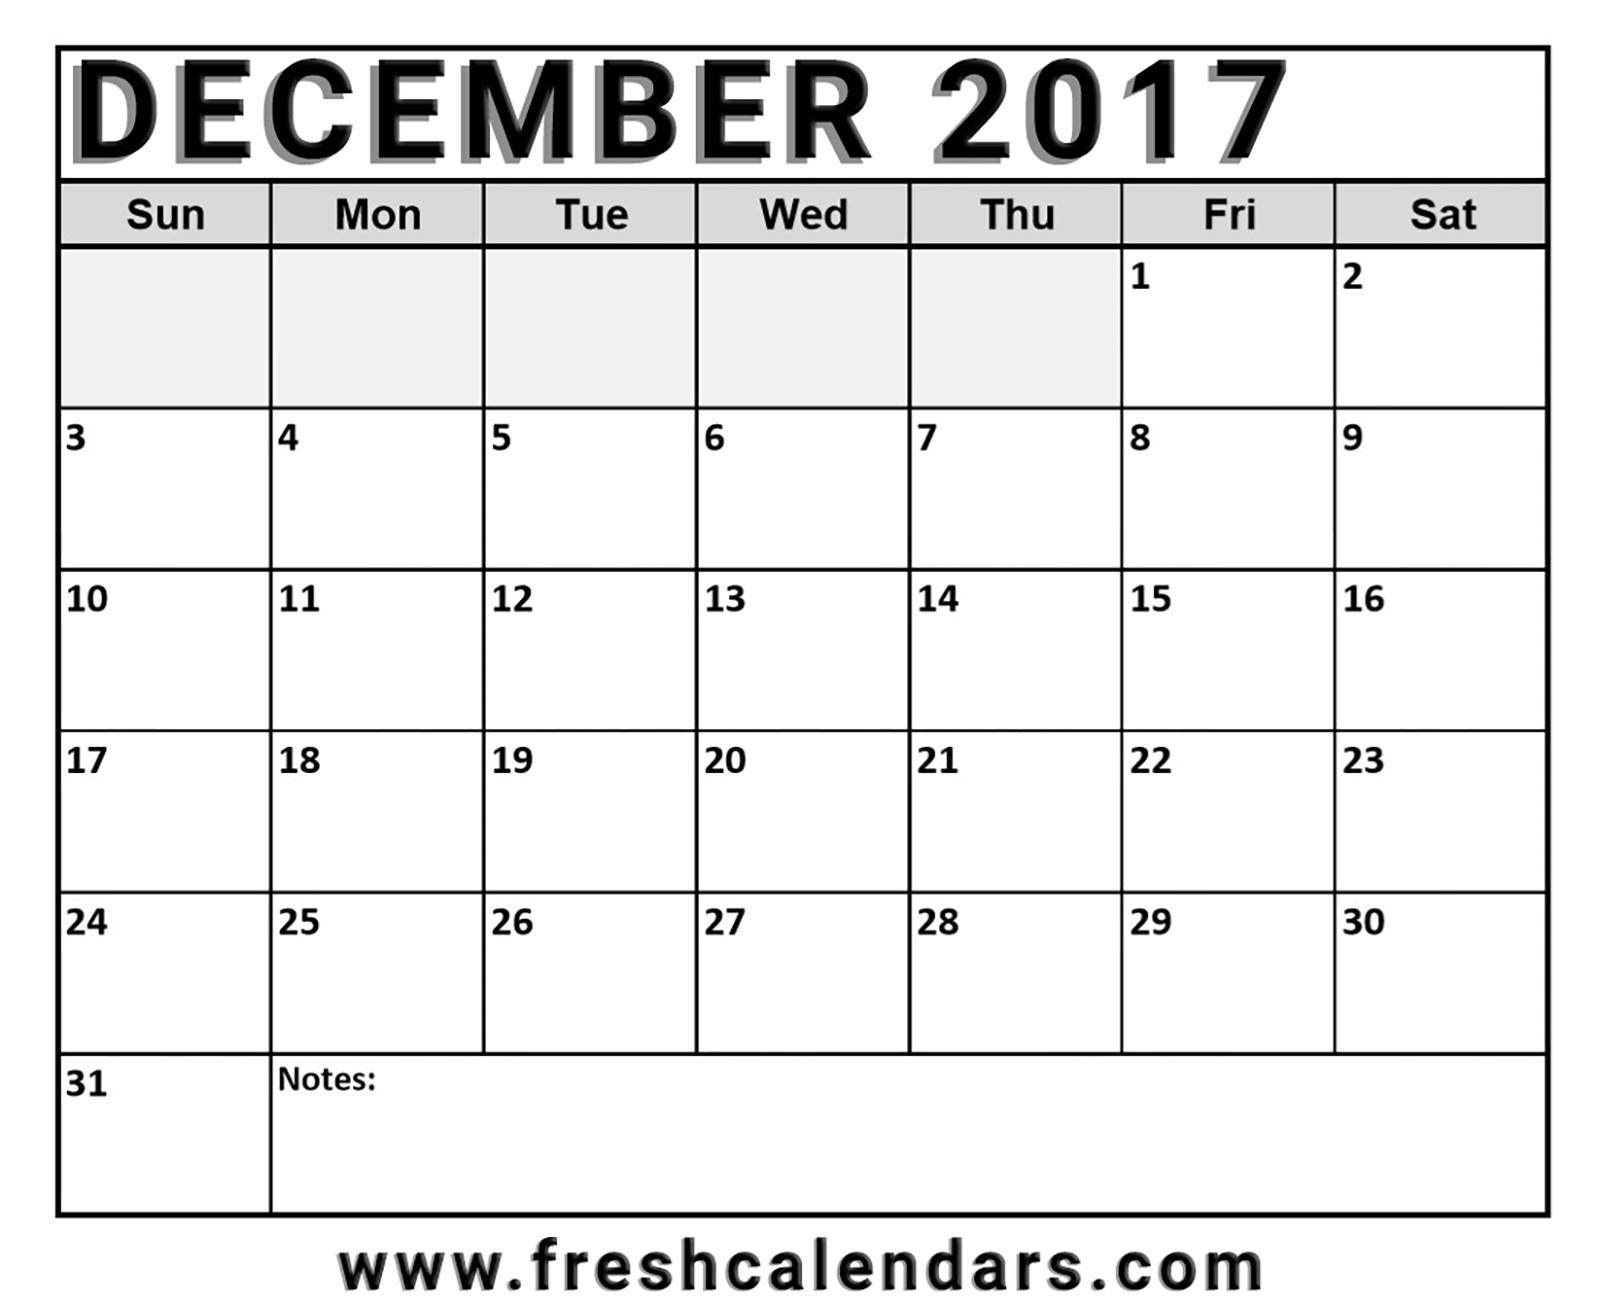 December 2017 Calendar Pdf 1286